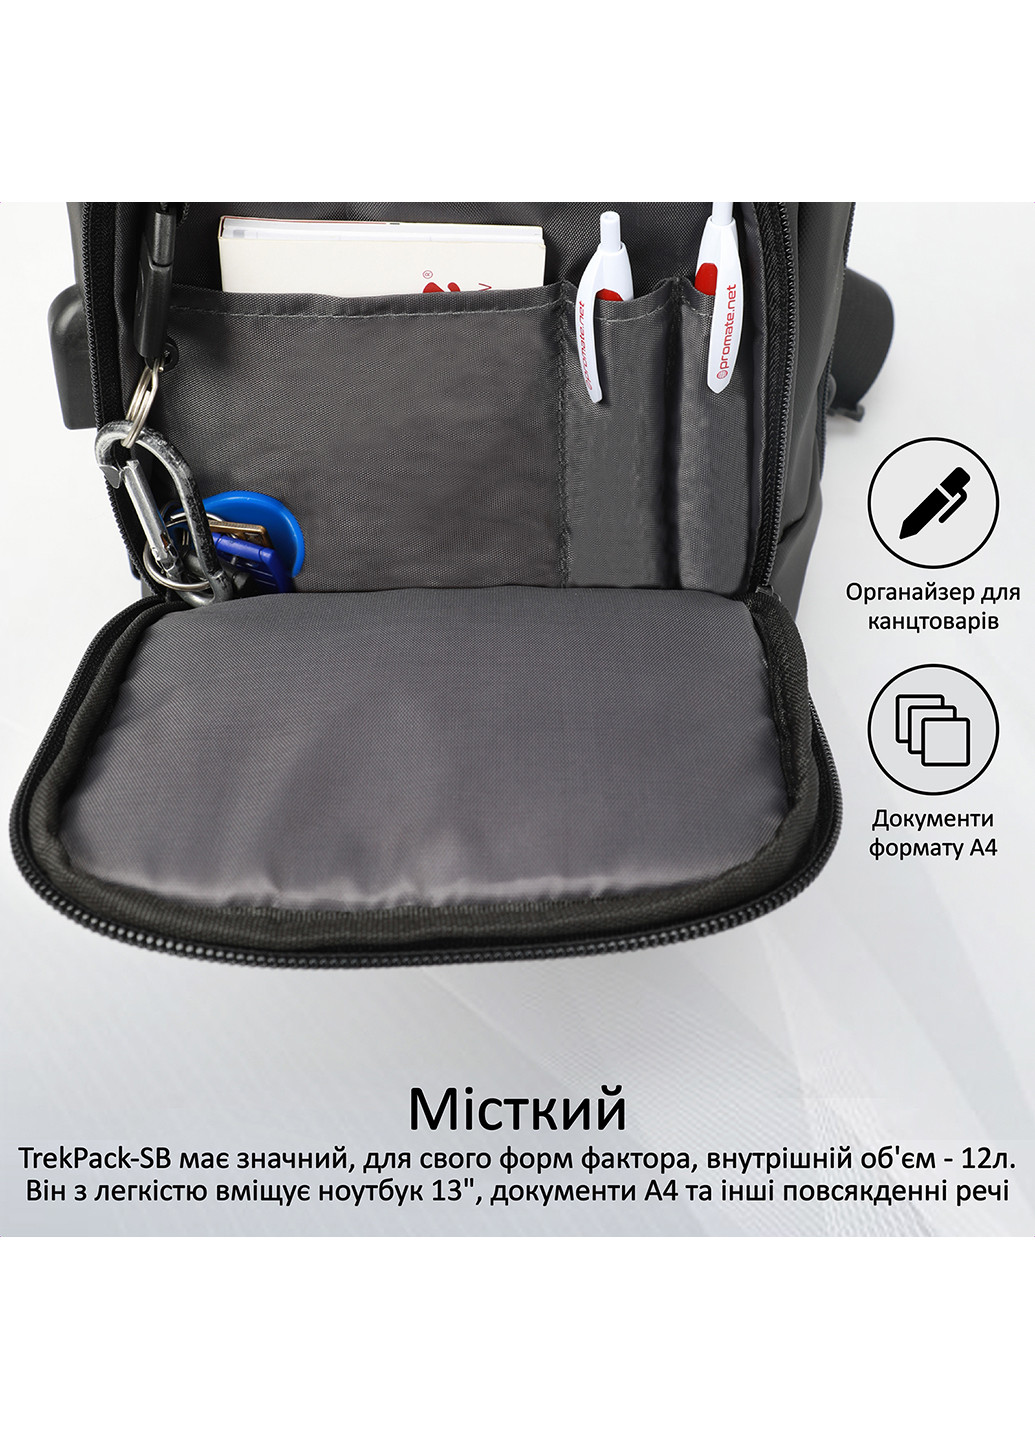 Рюкзак для ноутбука TrekPack-SB 13" Promate trekpack-sb.black (202118087)